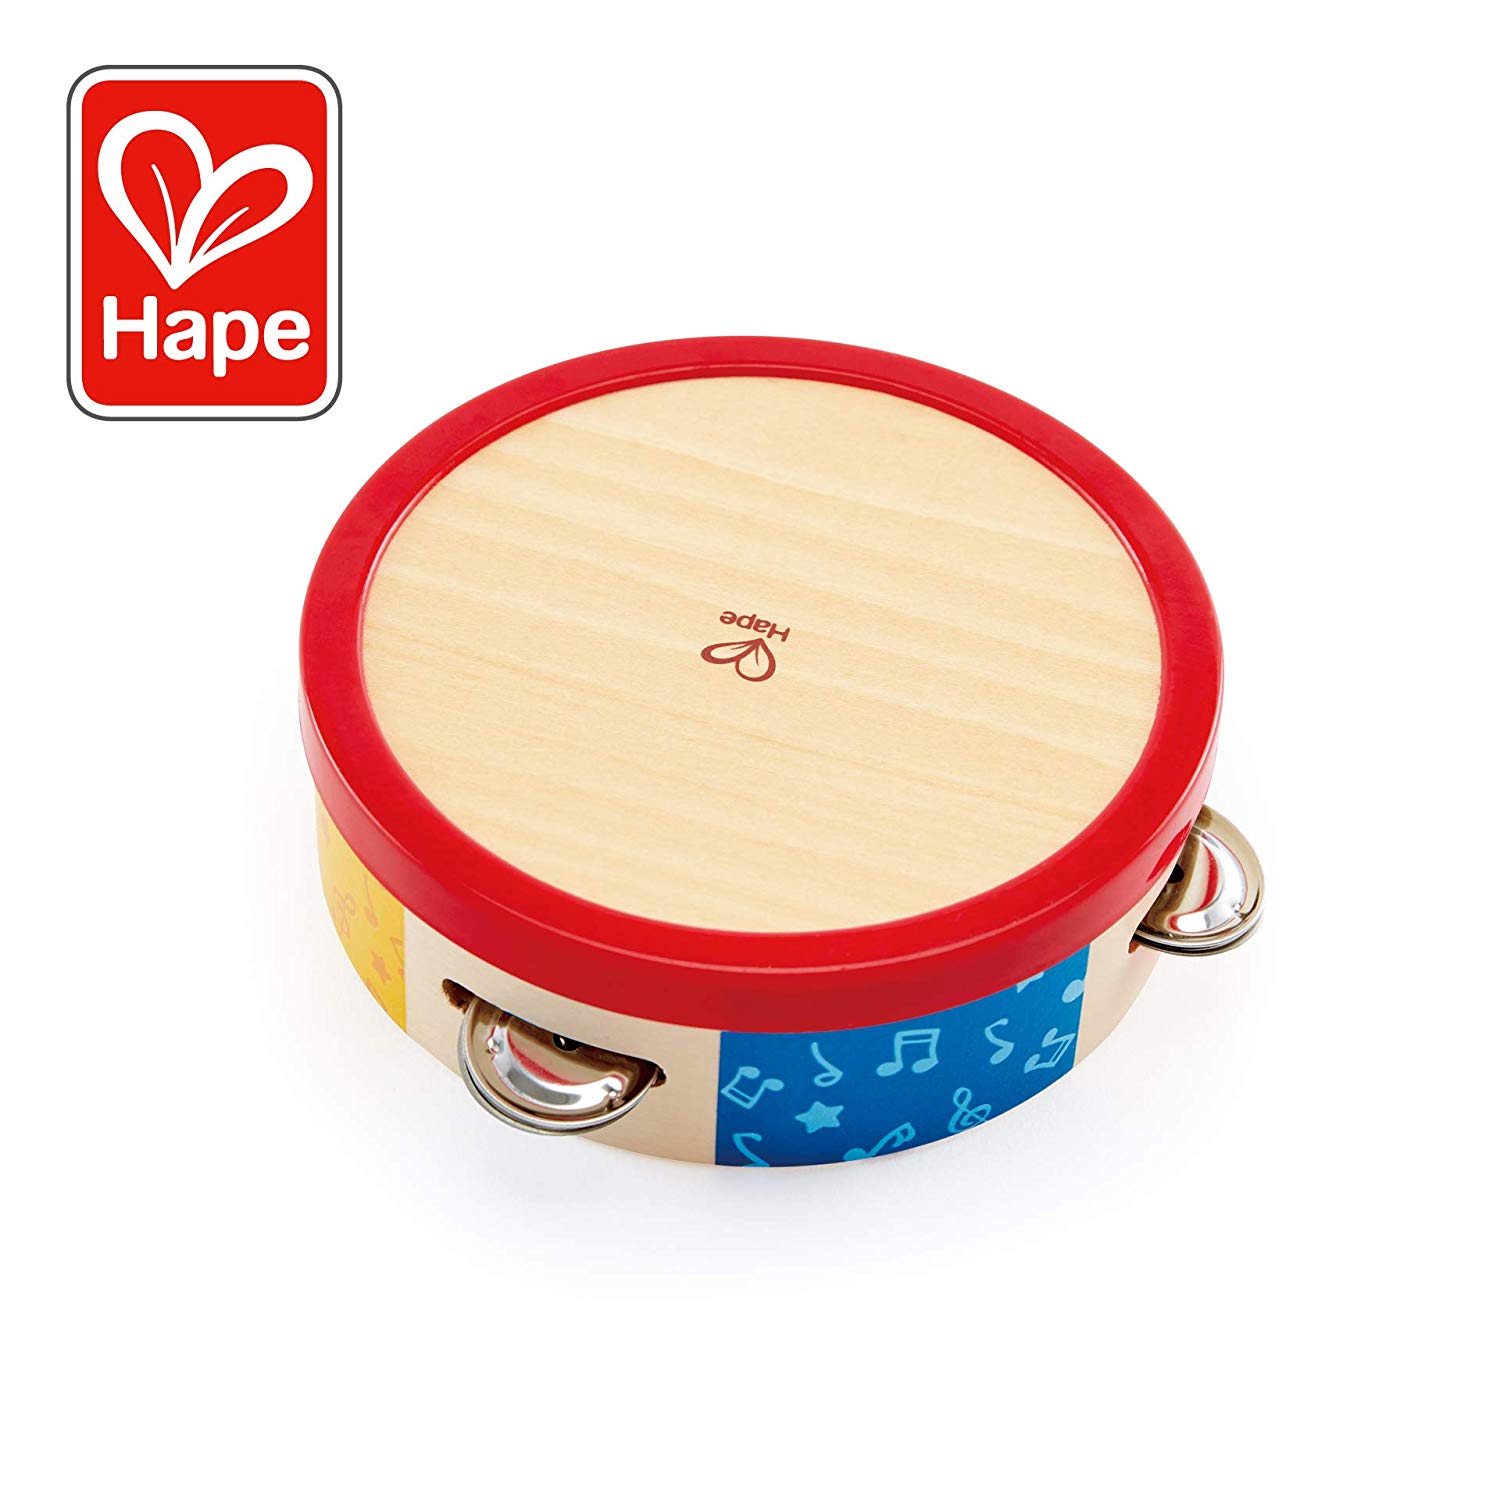 Hape International Hape E0607 Colourful Tambourine Musical Instrument